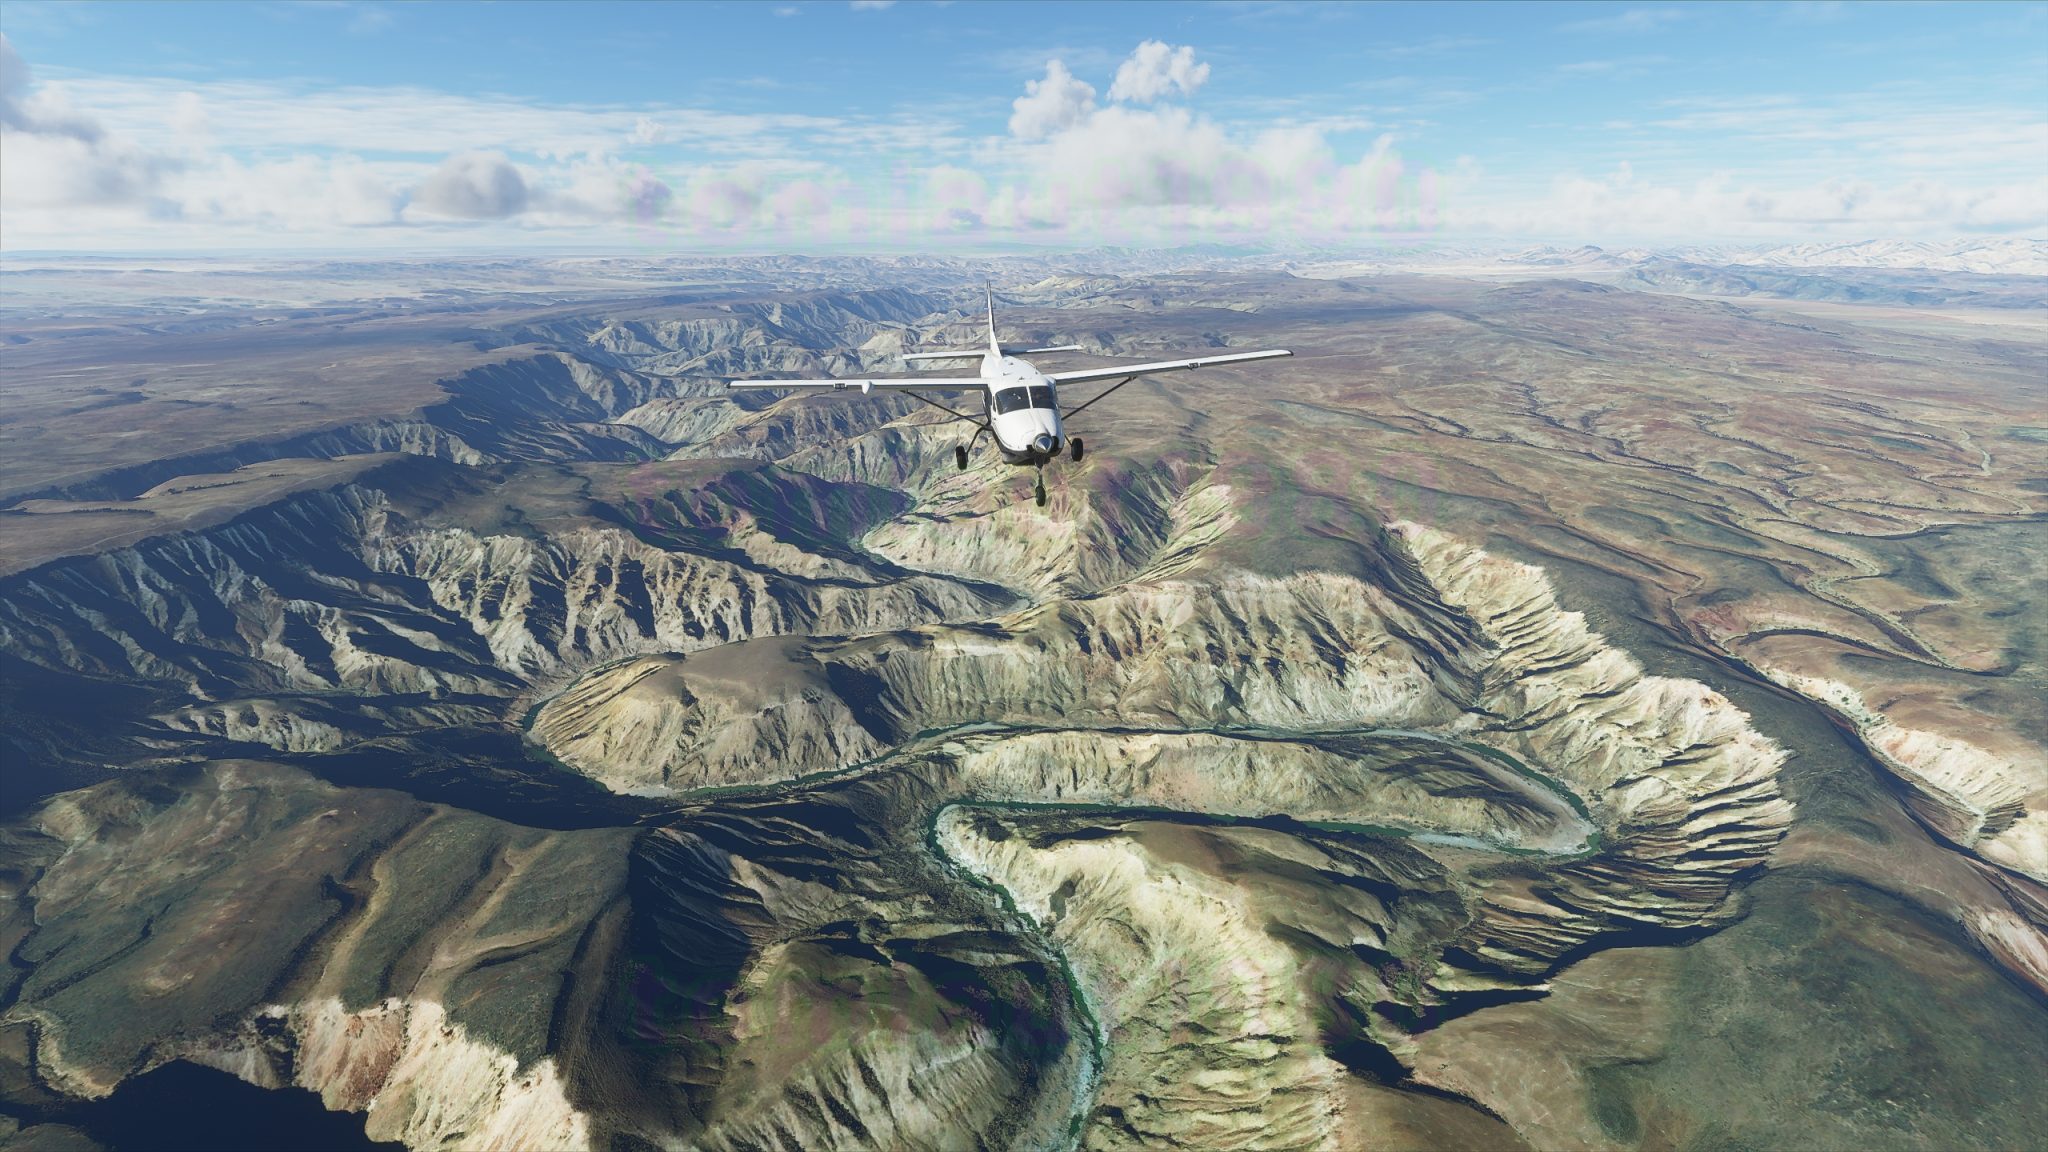 Microsoft Flight Simulator 2020 : Le point du 12 mars 2020